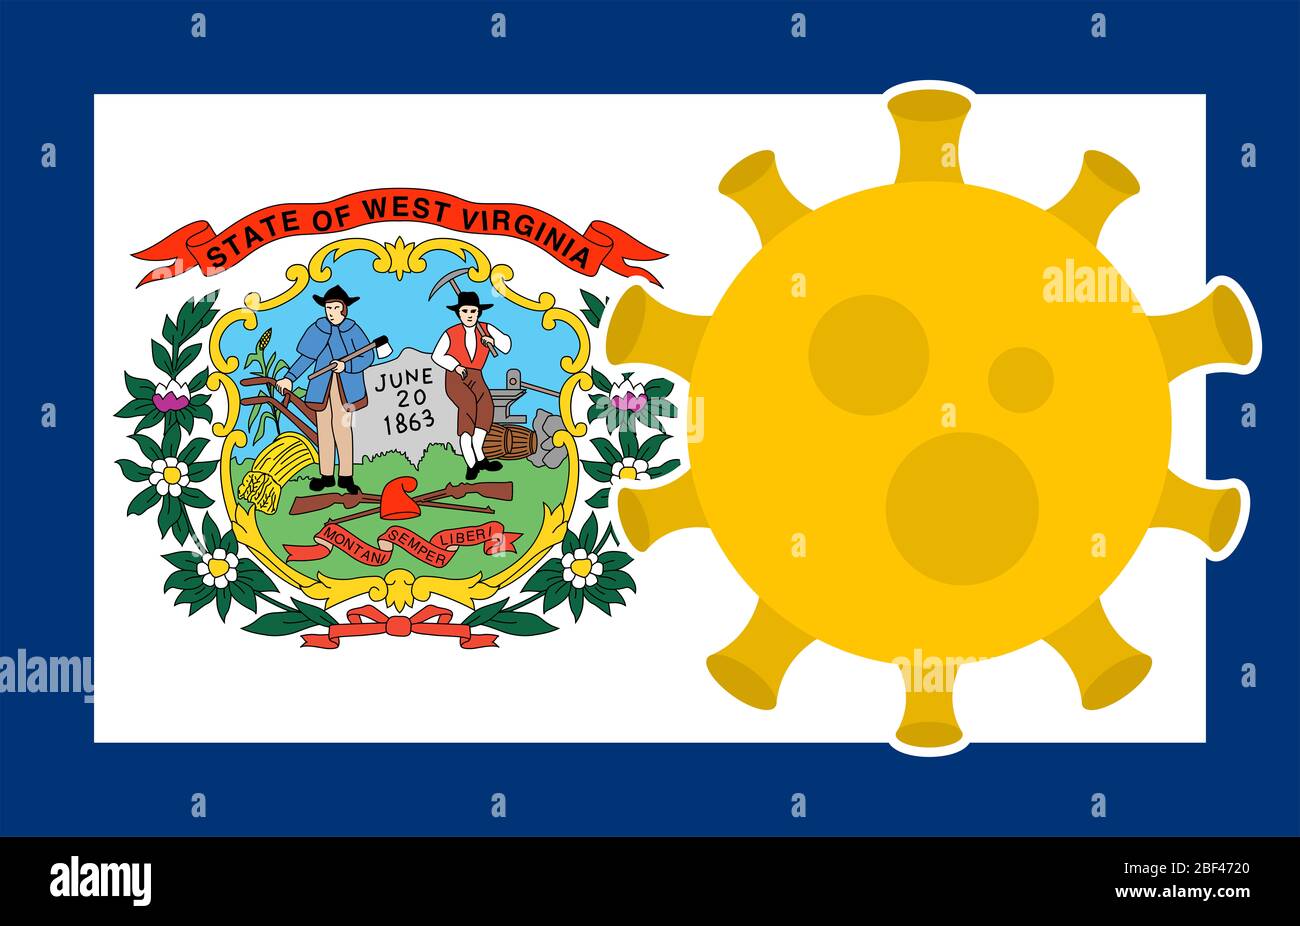 Flag of West Virginia State With Outbreak Viruses Background of USA State flag. Novel Coronavirus Disease COVID-19. Coronavirus Infection And The Epid Stock Photo